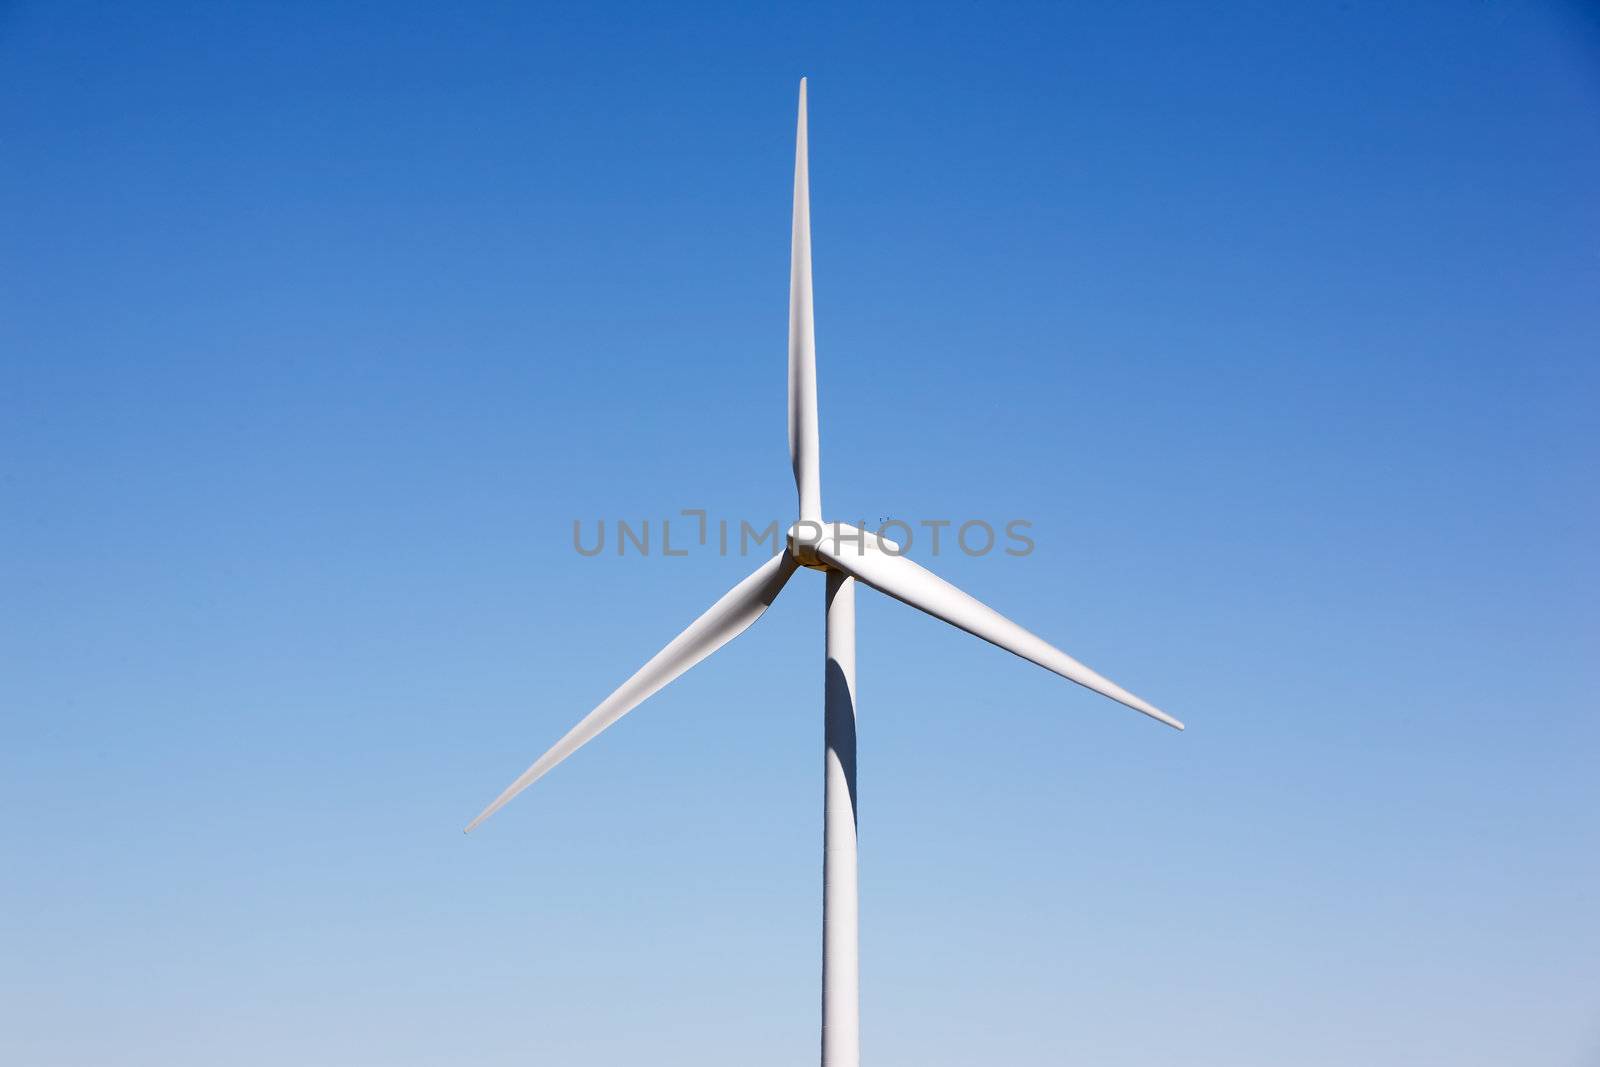 A detail of a wind turbine against a deep blue sky